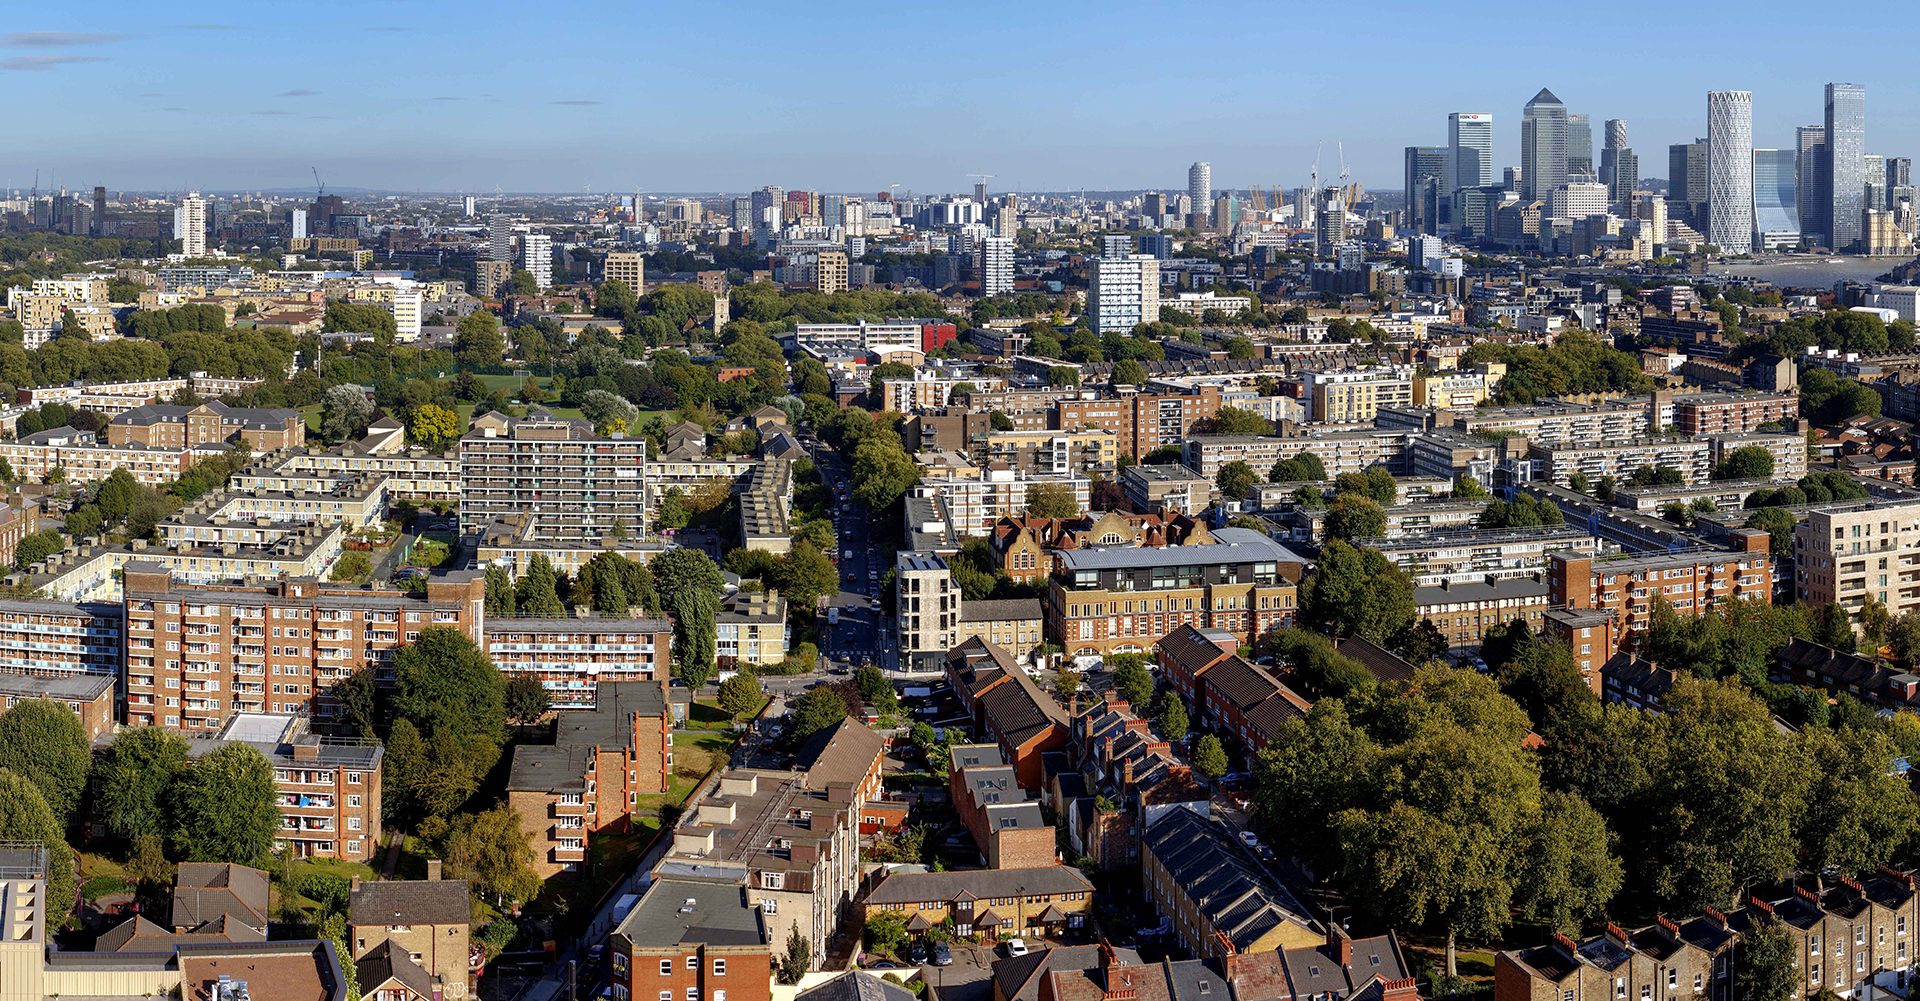 Panoramic photograph showing East London skyline